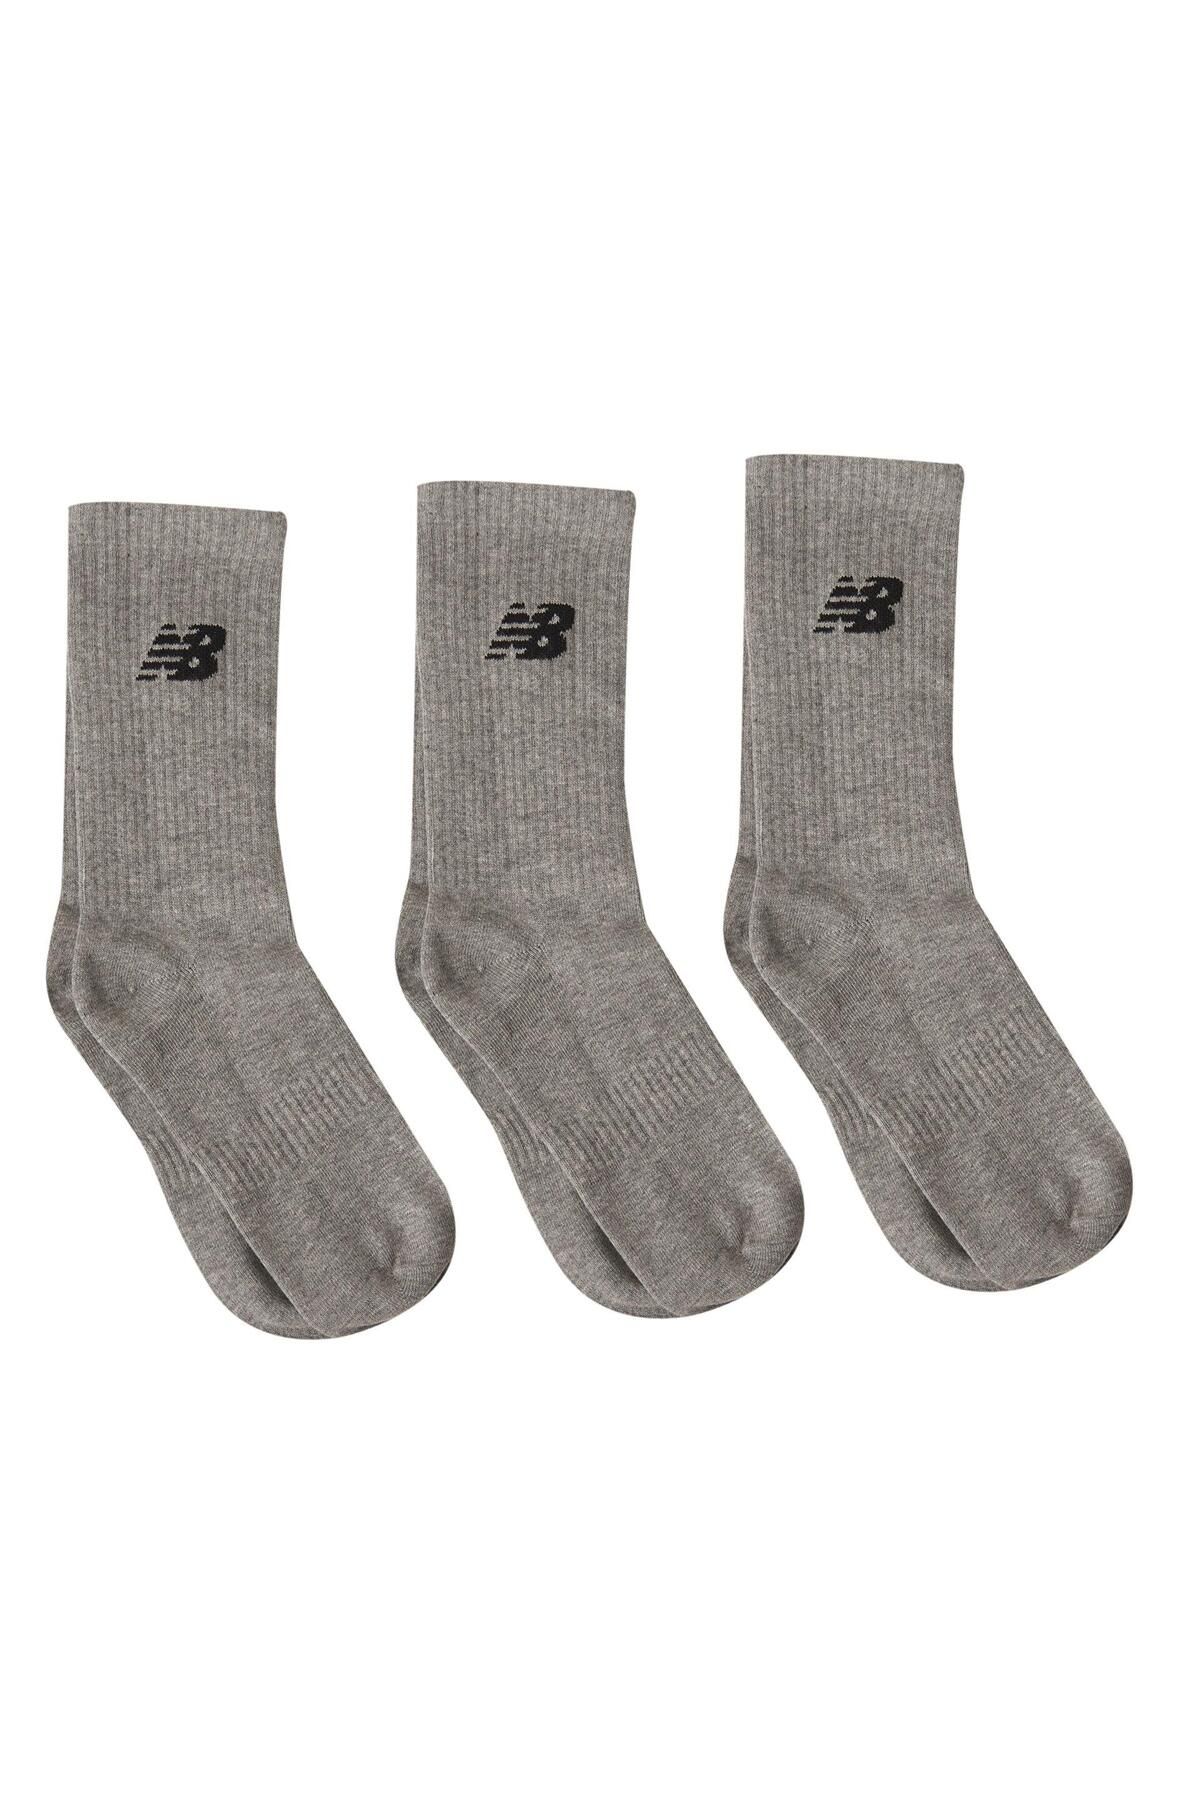 New Balance NB Lifestyle Socks Unisex Çorap